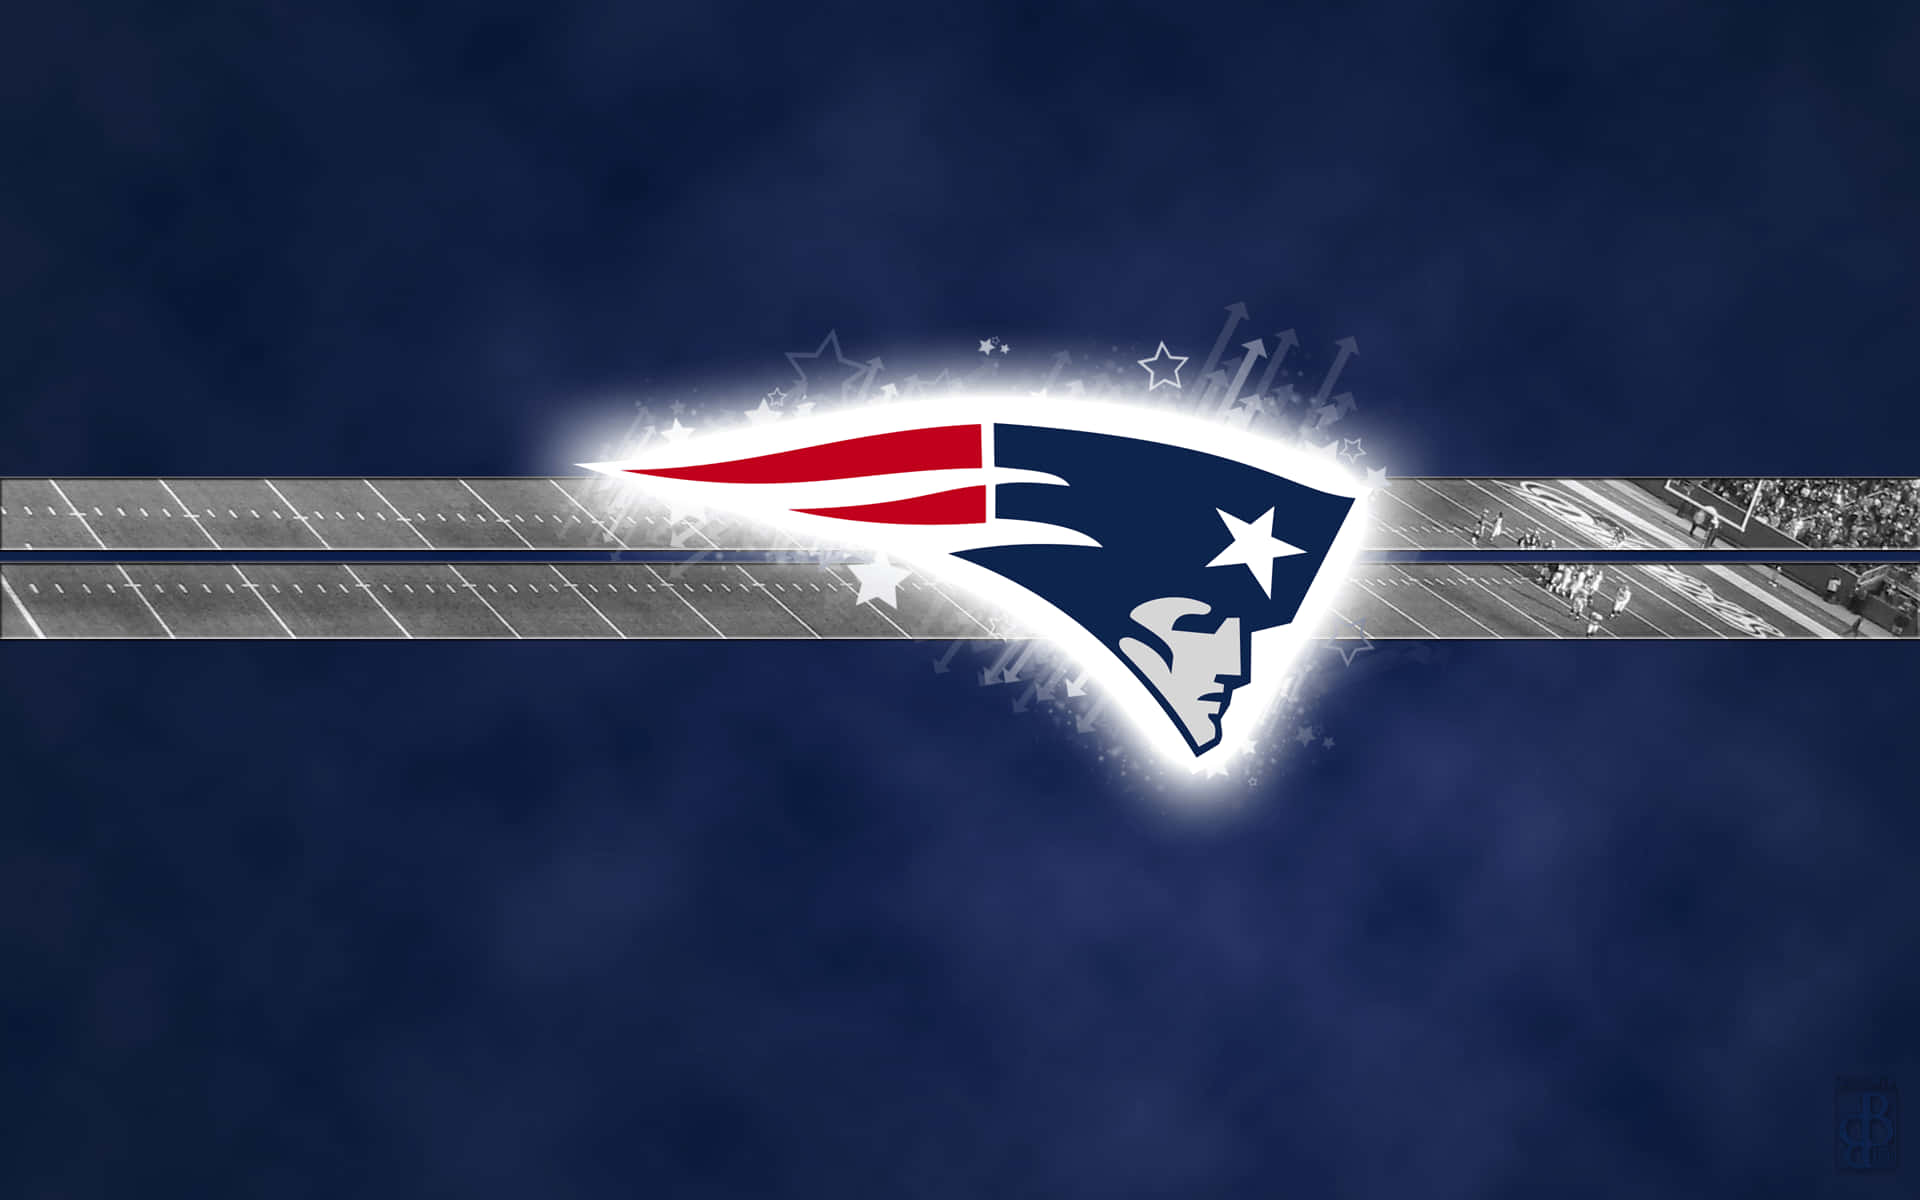 1. New England Patriots tapeter - tapeter til din skrivebord. Wallpaper